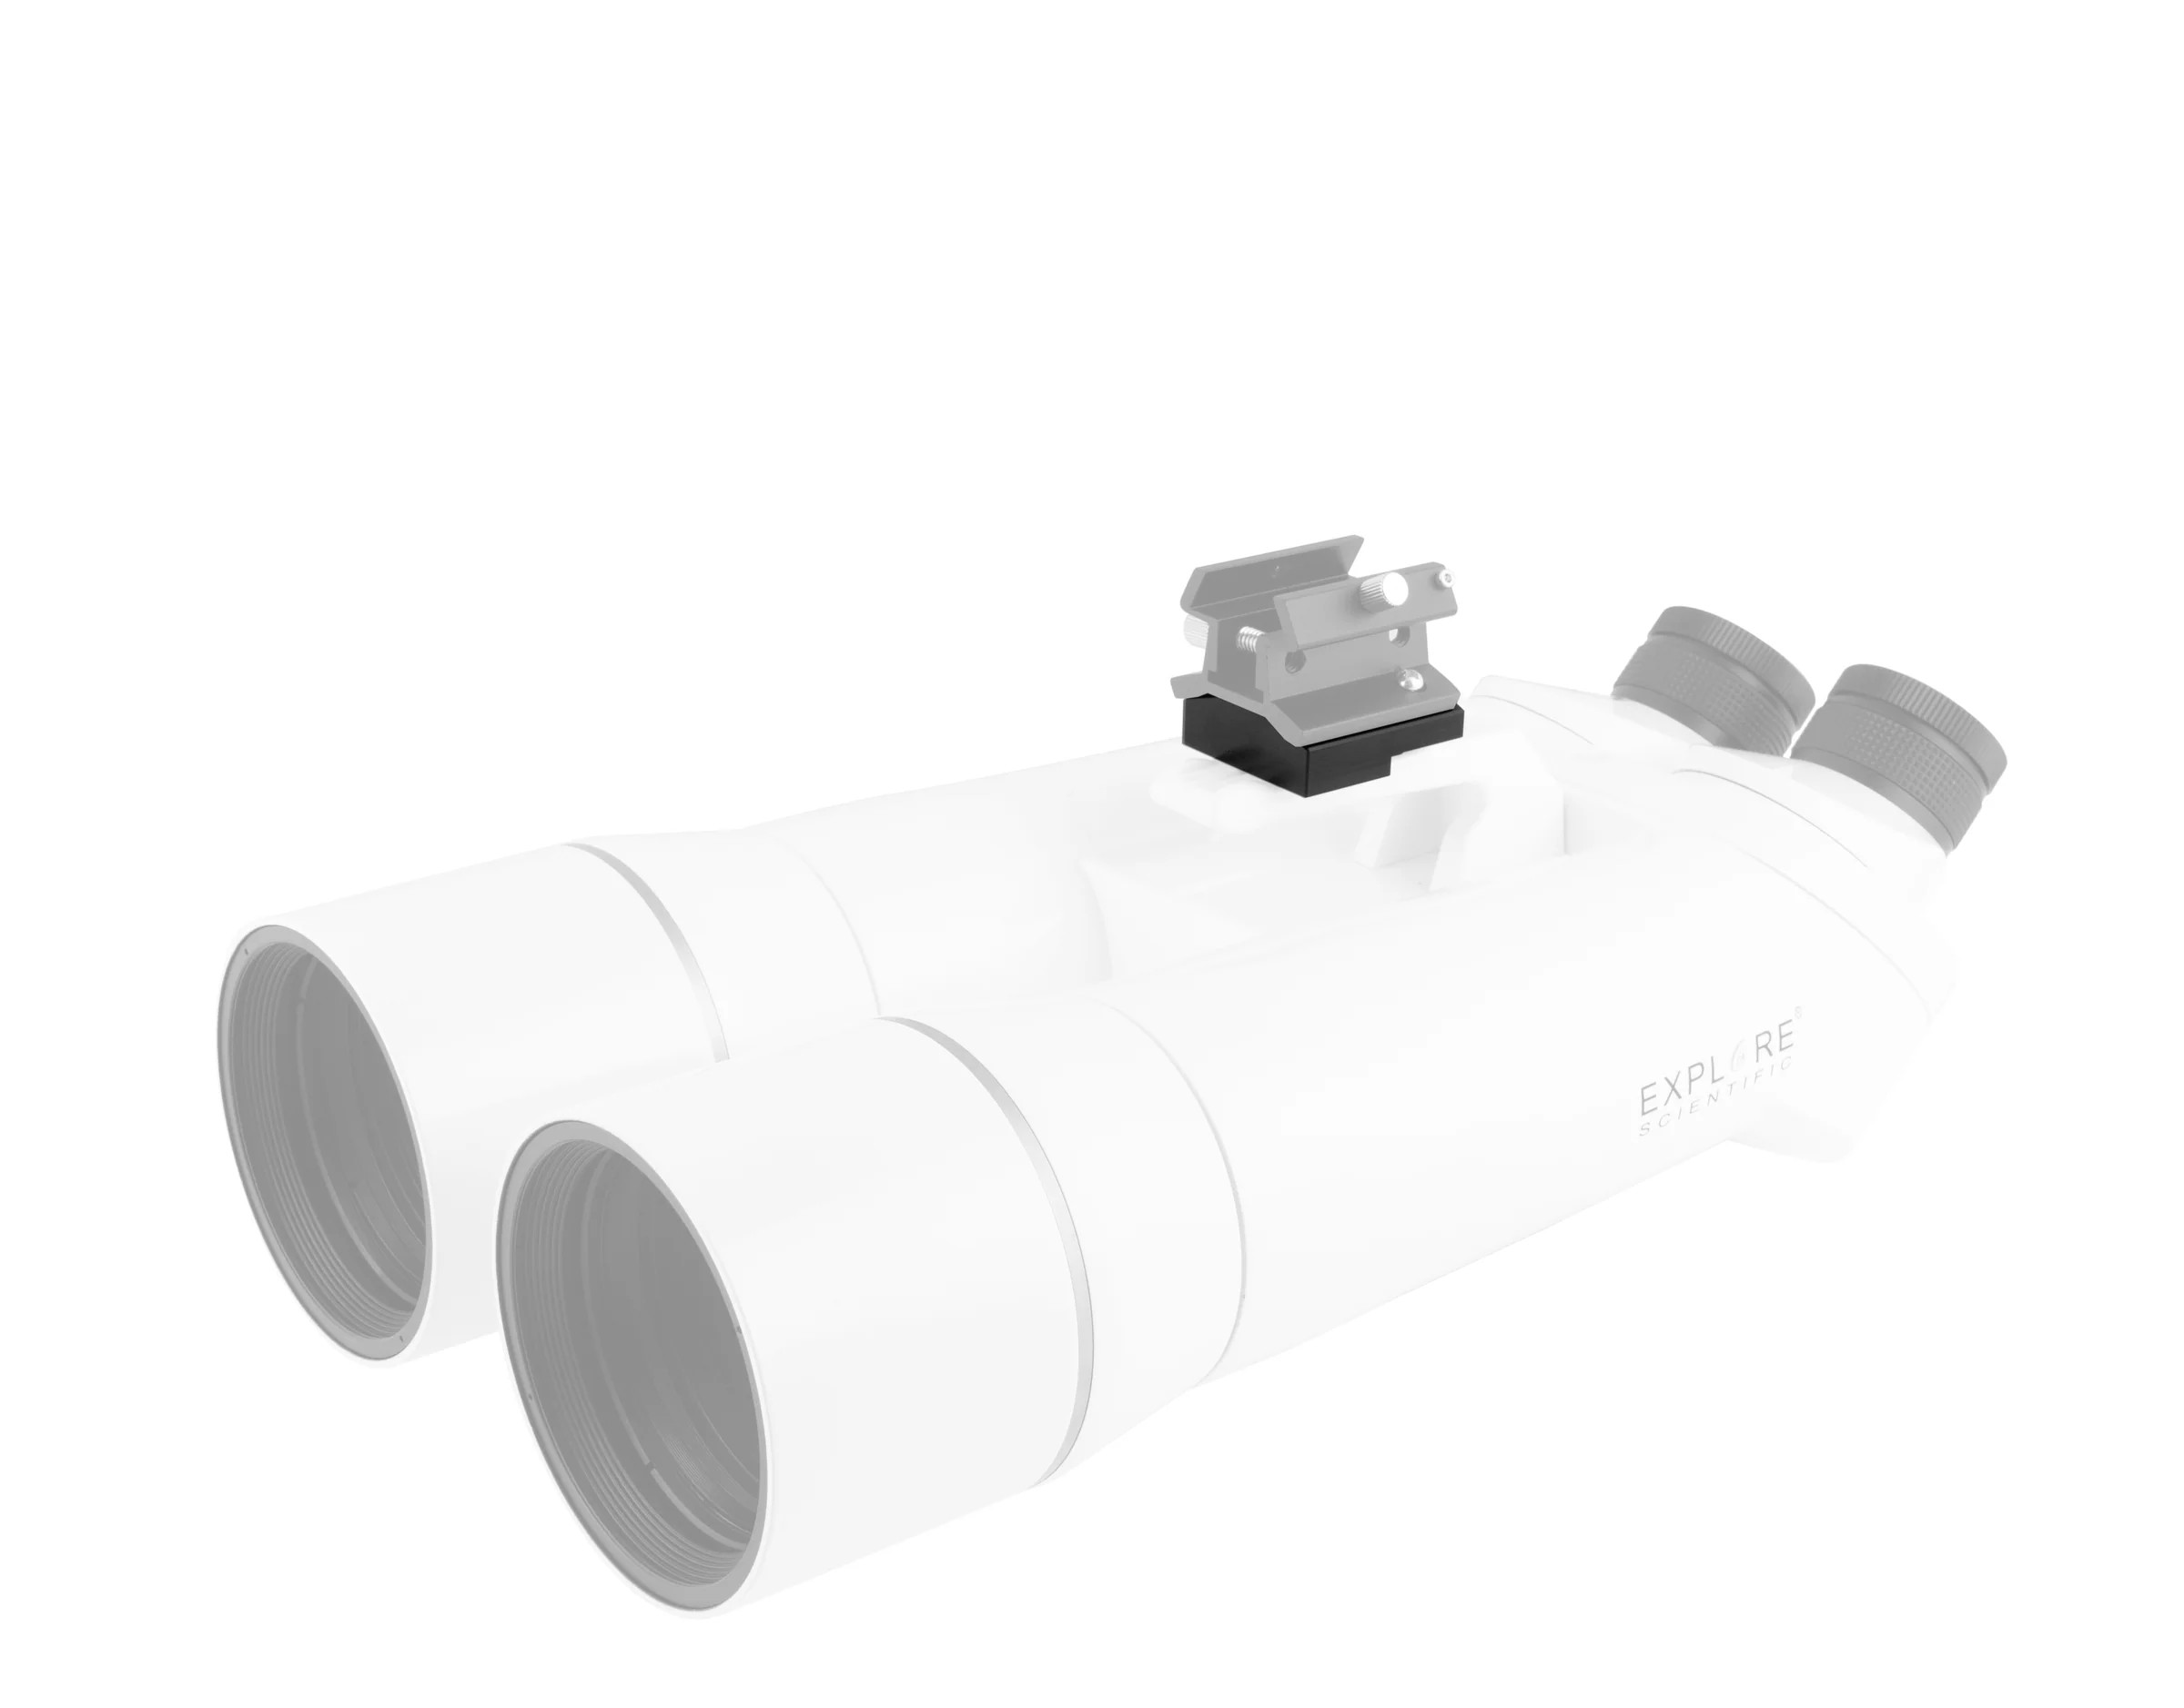 EXPLORE SCIENTIFIC Adapter Hybrid Finder Base for Giant Binoculars